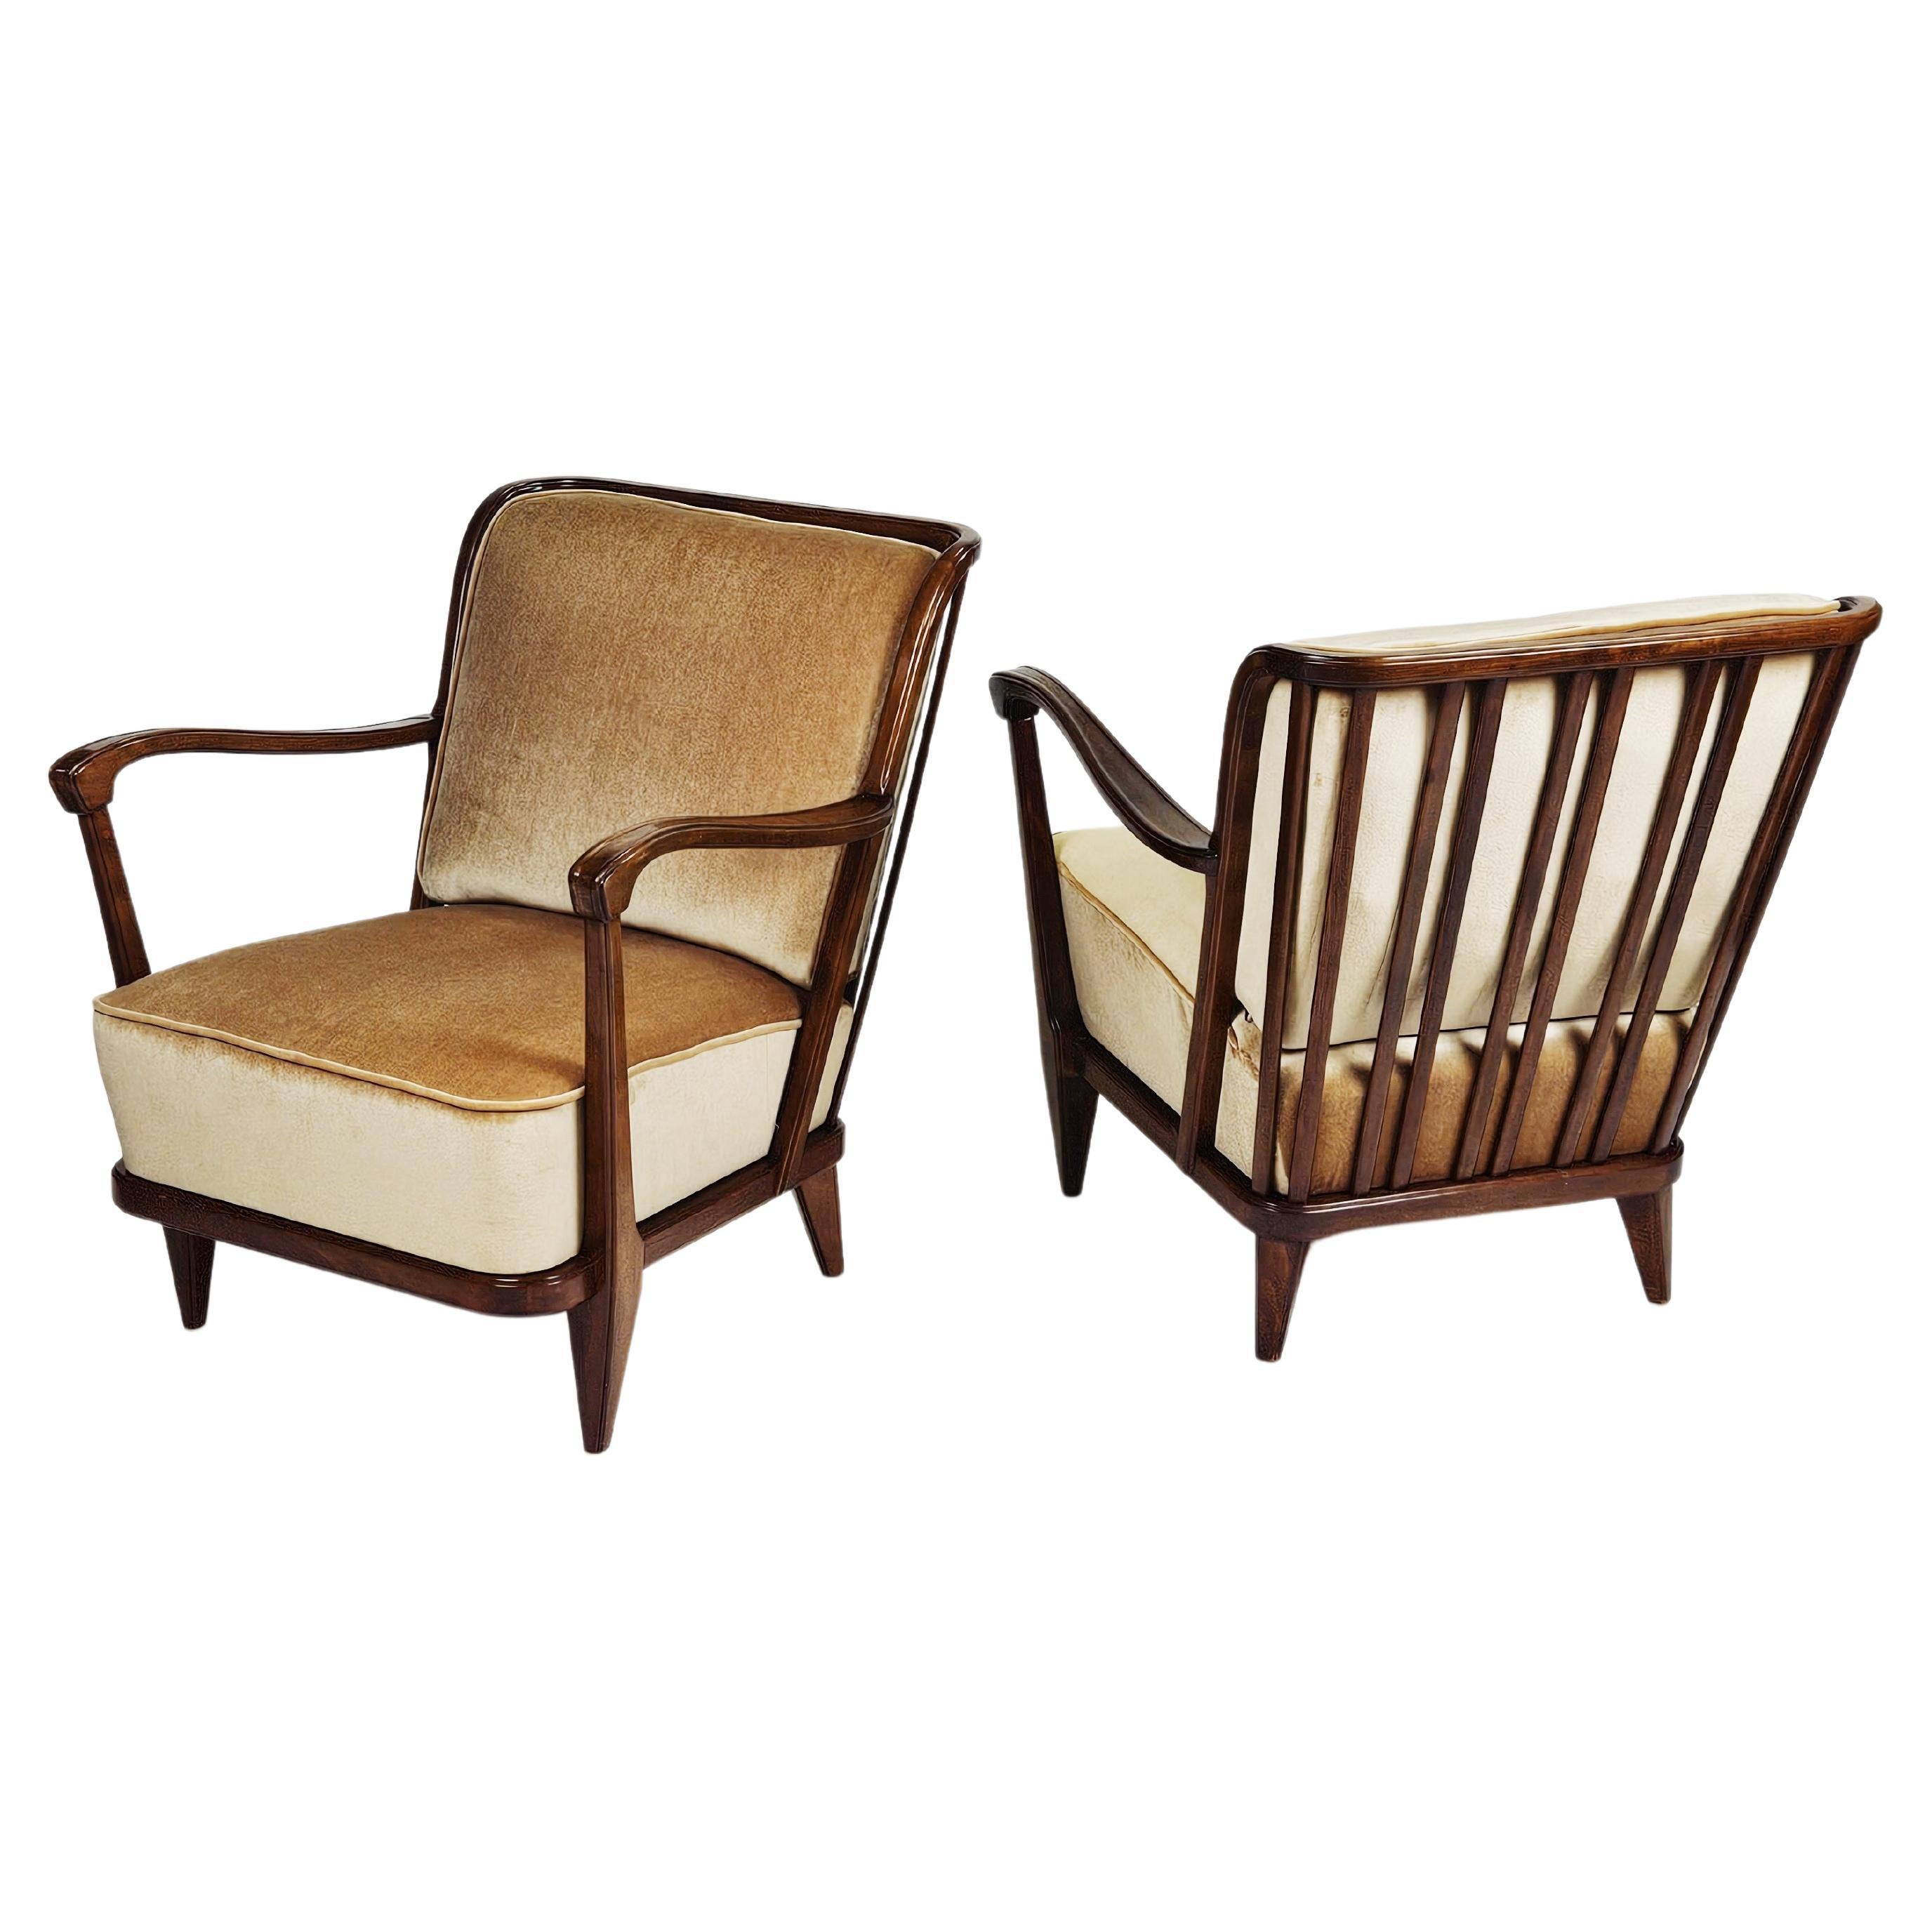 Scandinavian modern armchairs by Svante Skogh, Sweden, 1950s For Sale